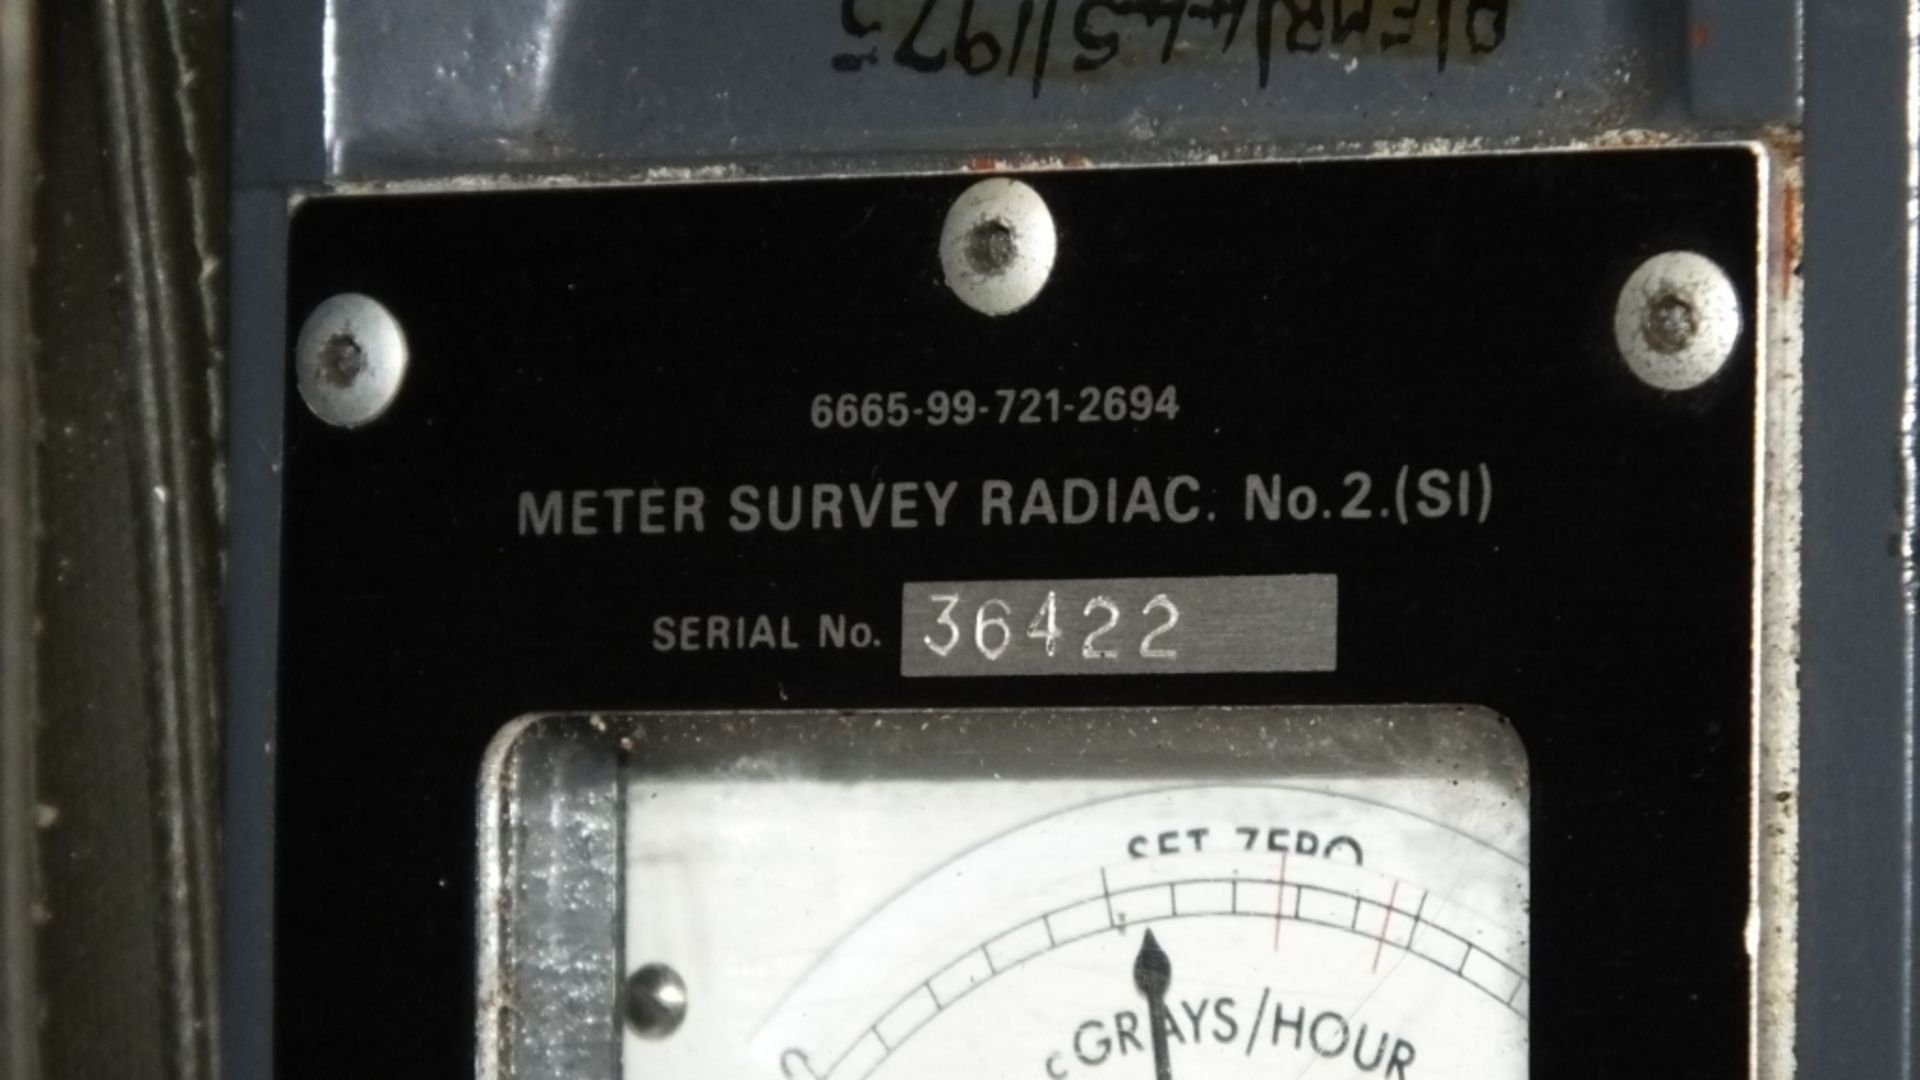 Meter Survey Radiac no. 2 (S1) - NSN 6665-99-721-2694 - Image 2 of 2